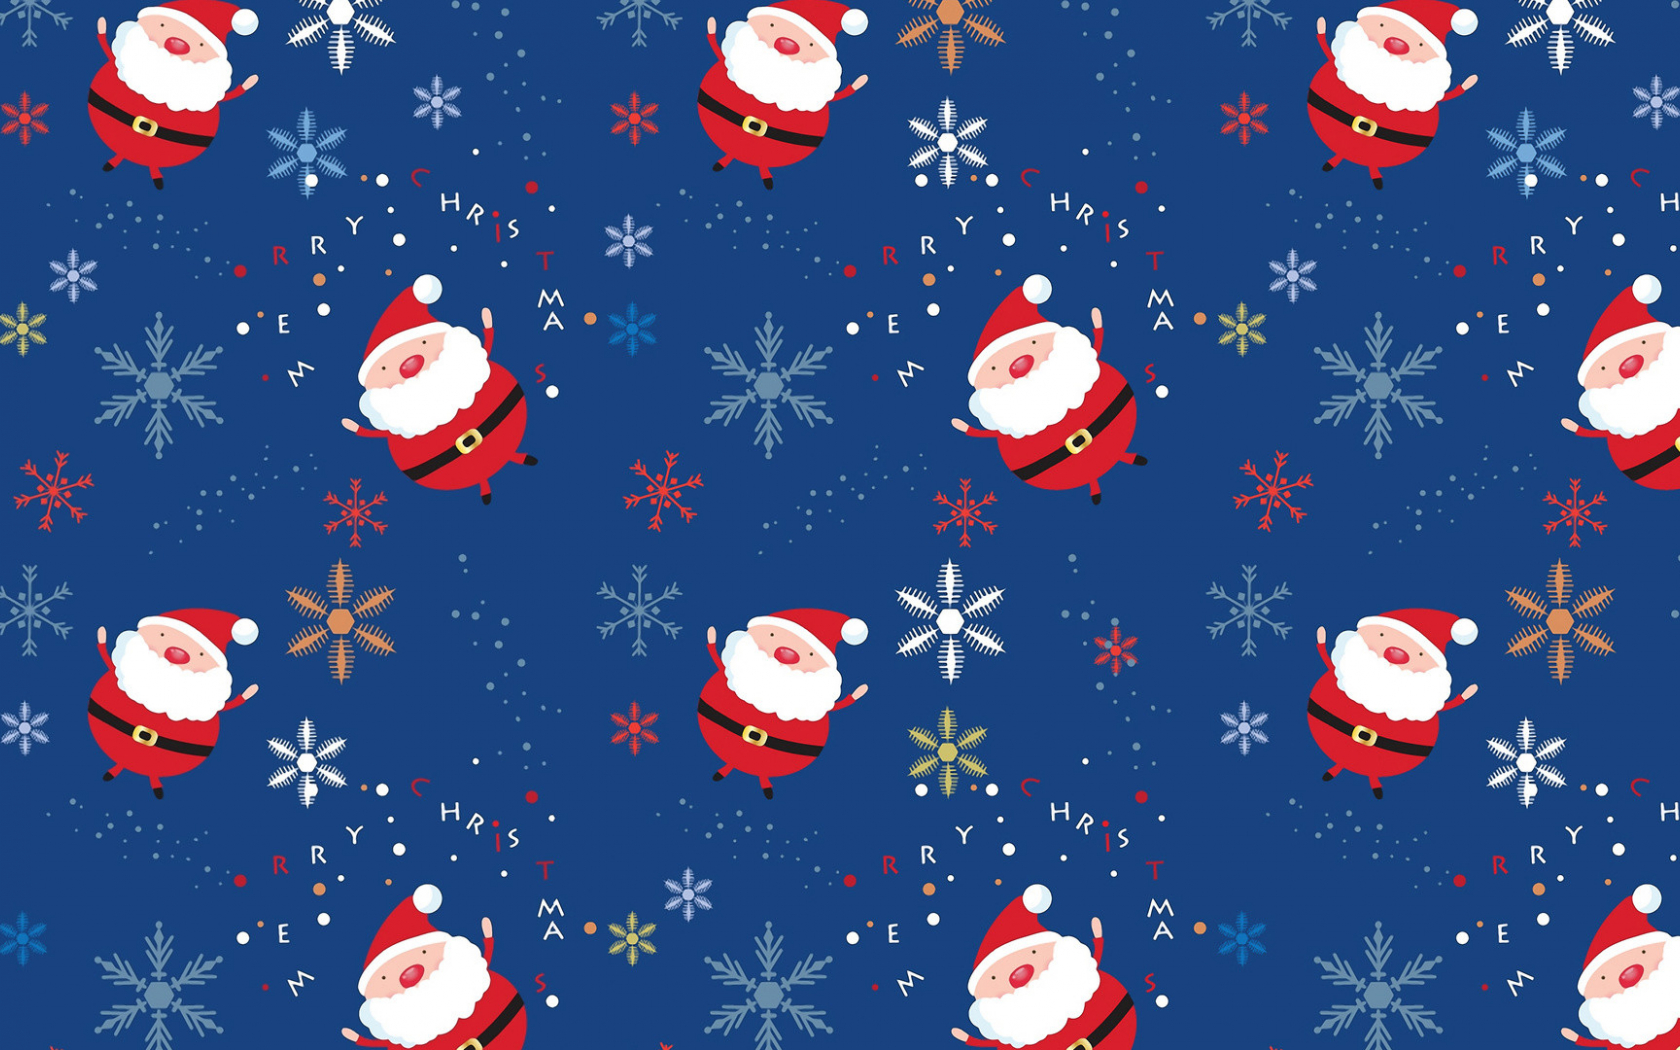 Cute Christmas Desktop Backgrounds